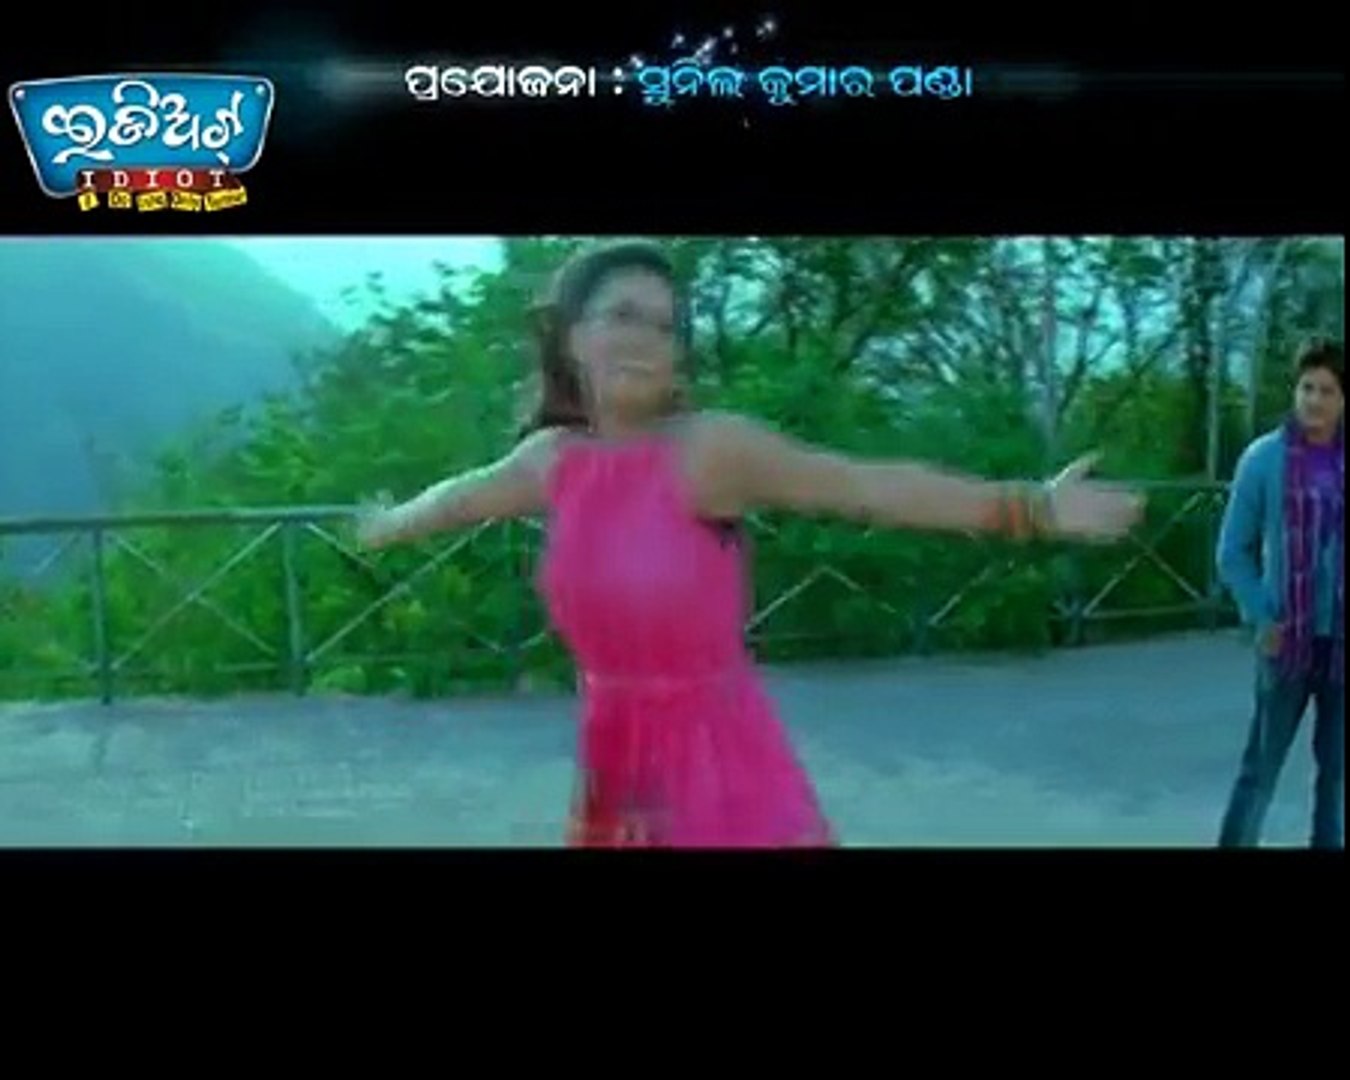 Odia Movie IDIOT, song - Dheema Dheema, music-Goodly Rath, singer- Babushaan